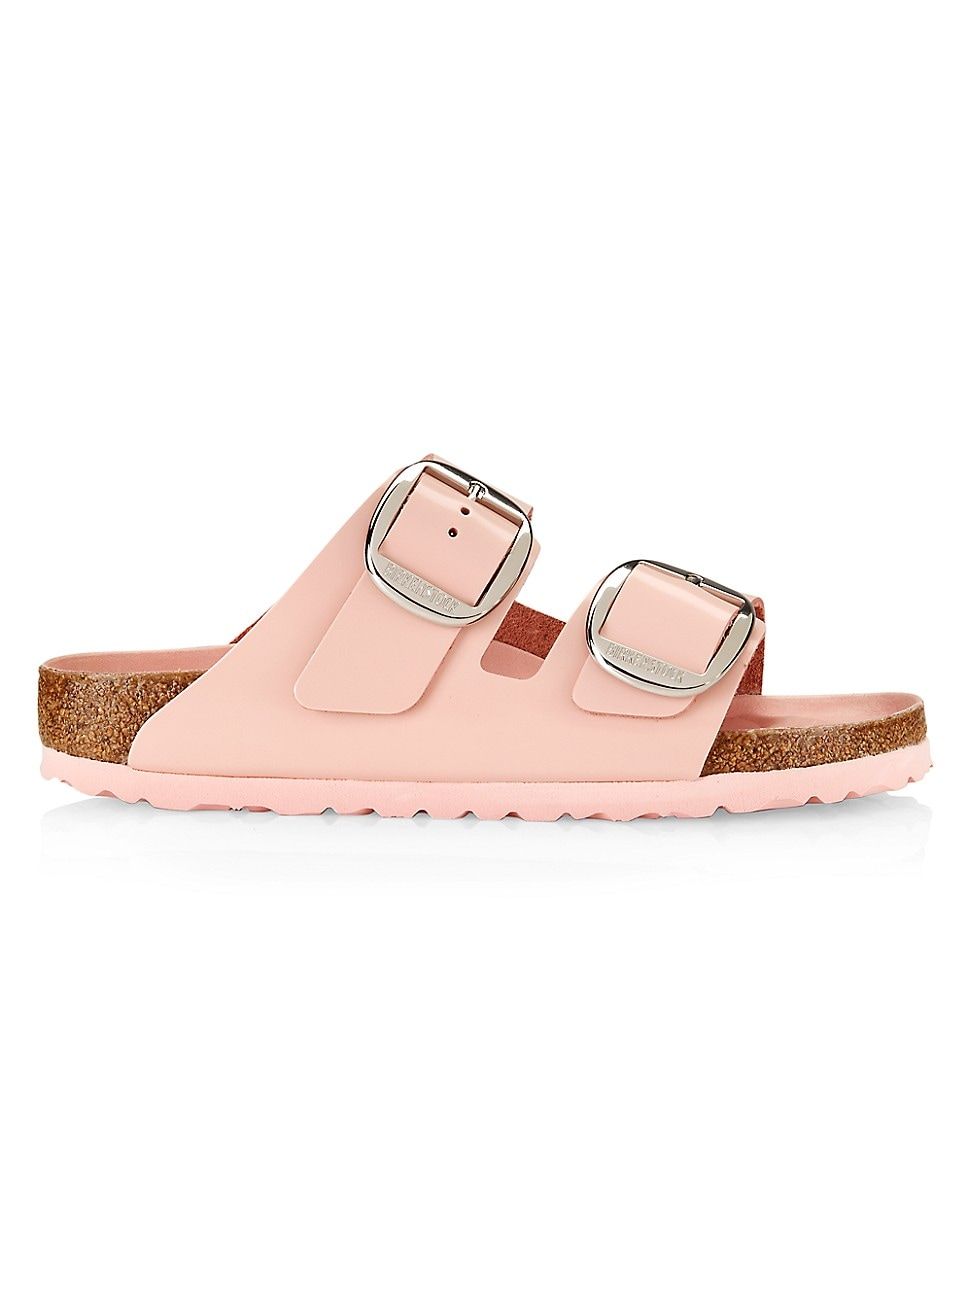 Women's Arizona Big Buckle Leather Sandals - Pink - Size 11 | Saks Fifth Avenue